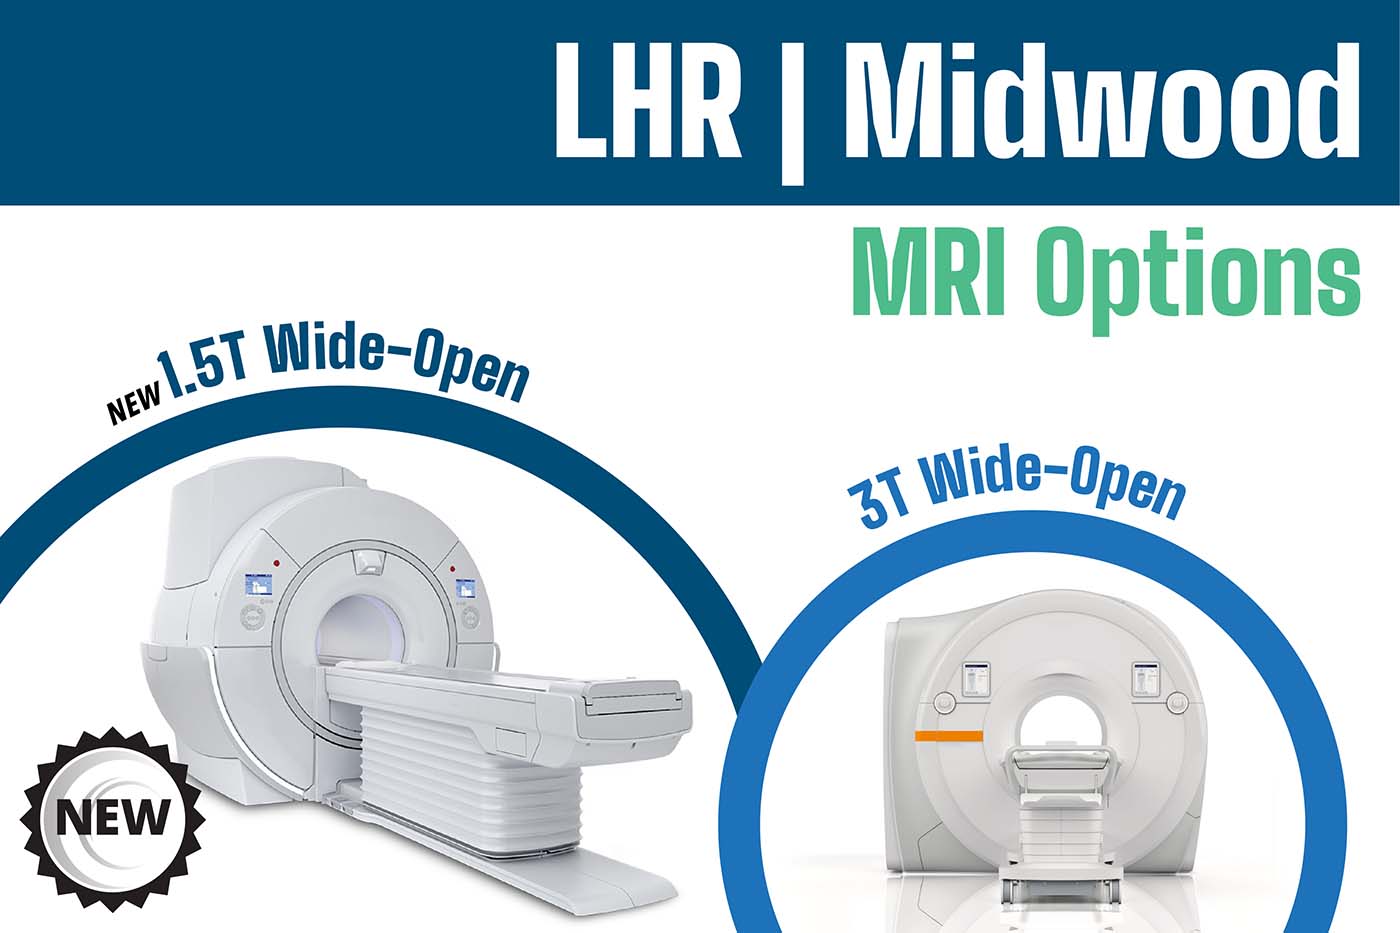 LHR Midwood Imaging Center MRI Options